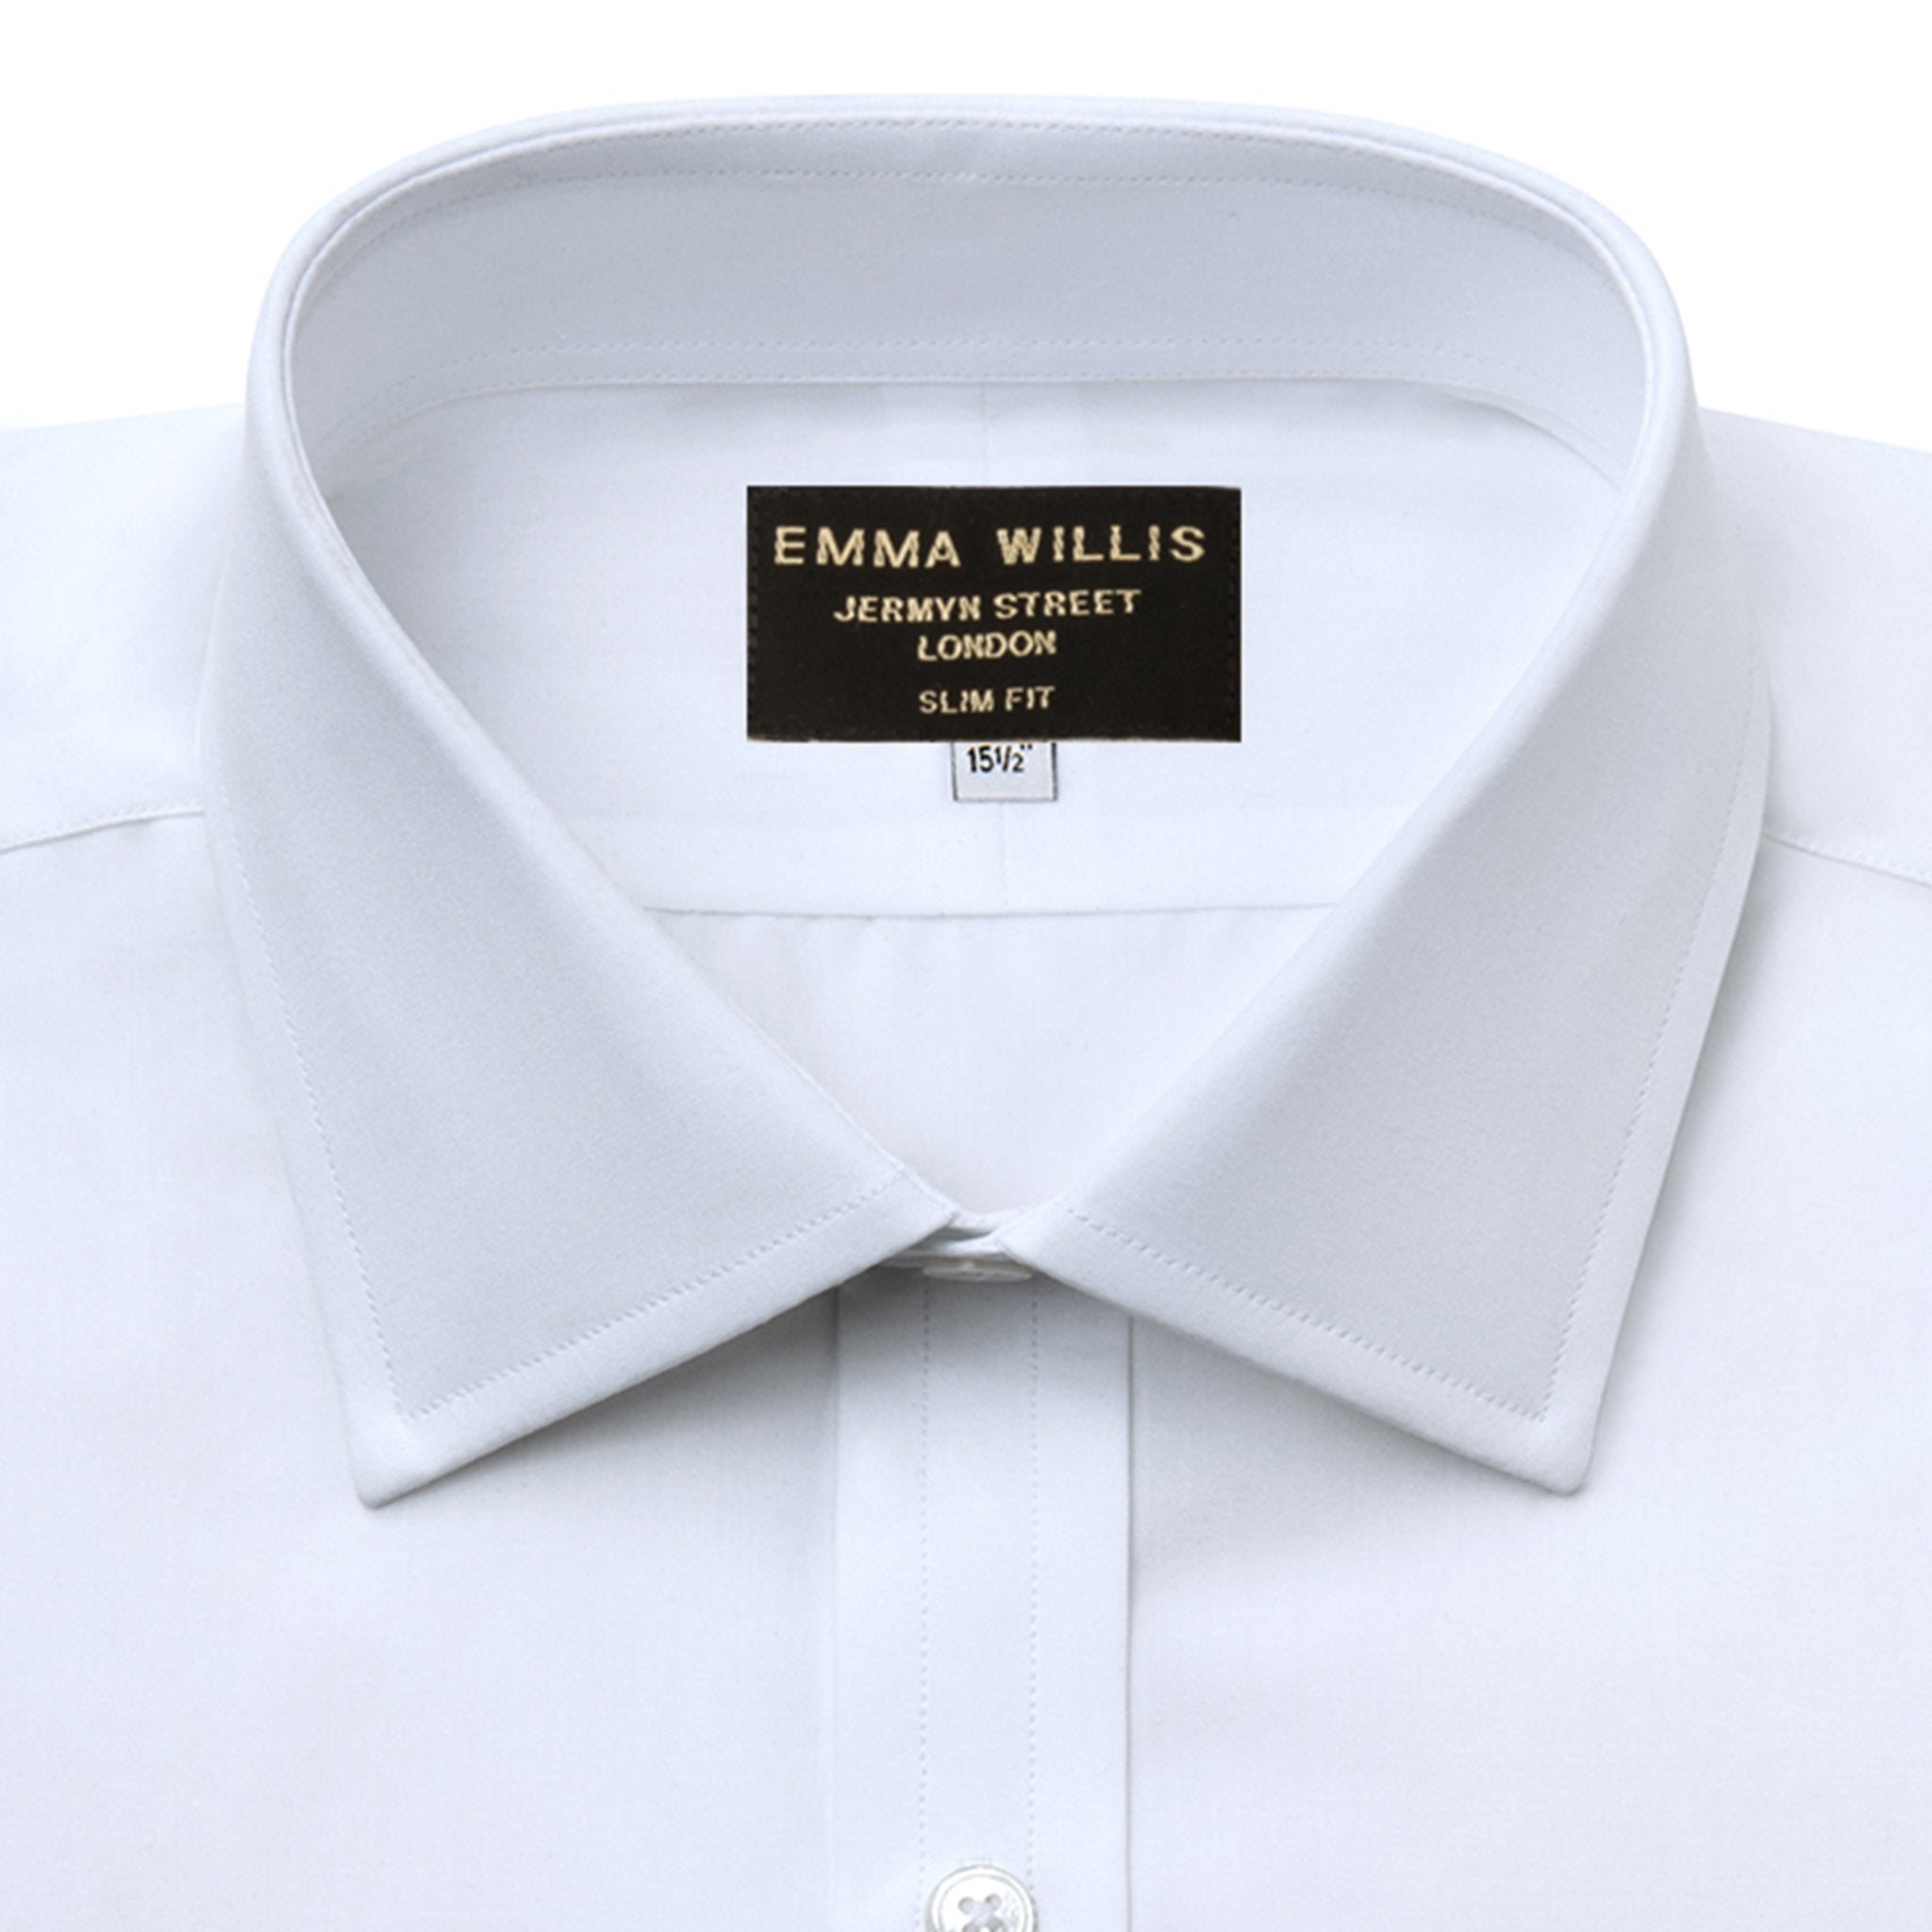 White Supraluxe Cotton Shirt - Bespoke freeshipping - Emma Willis